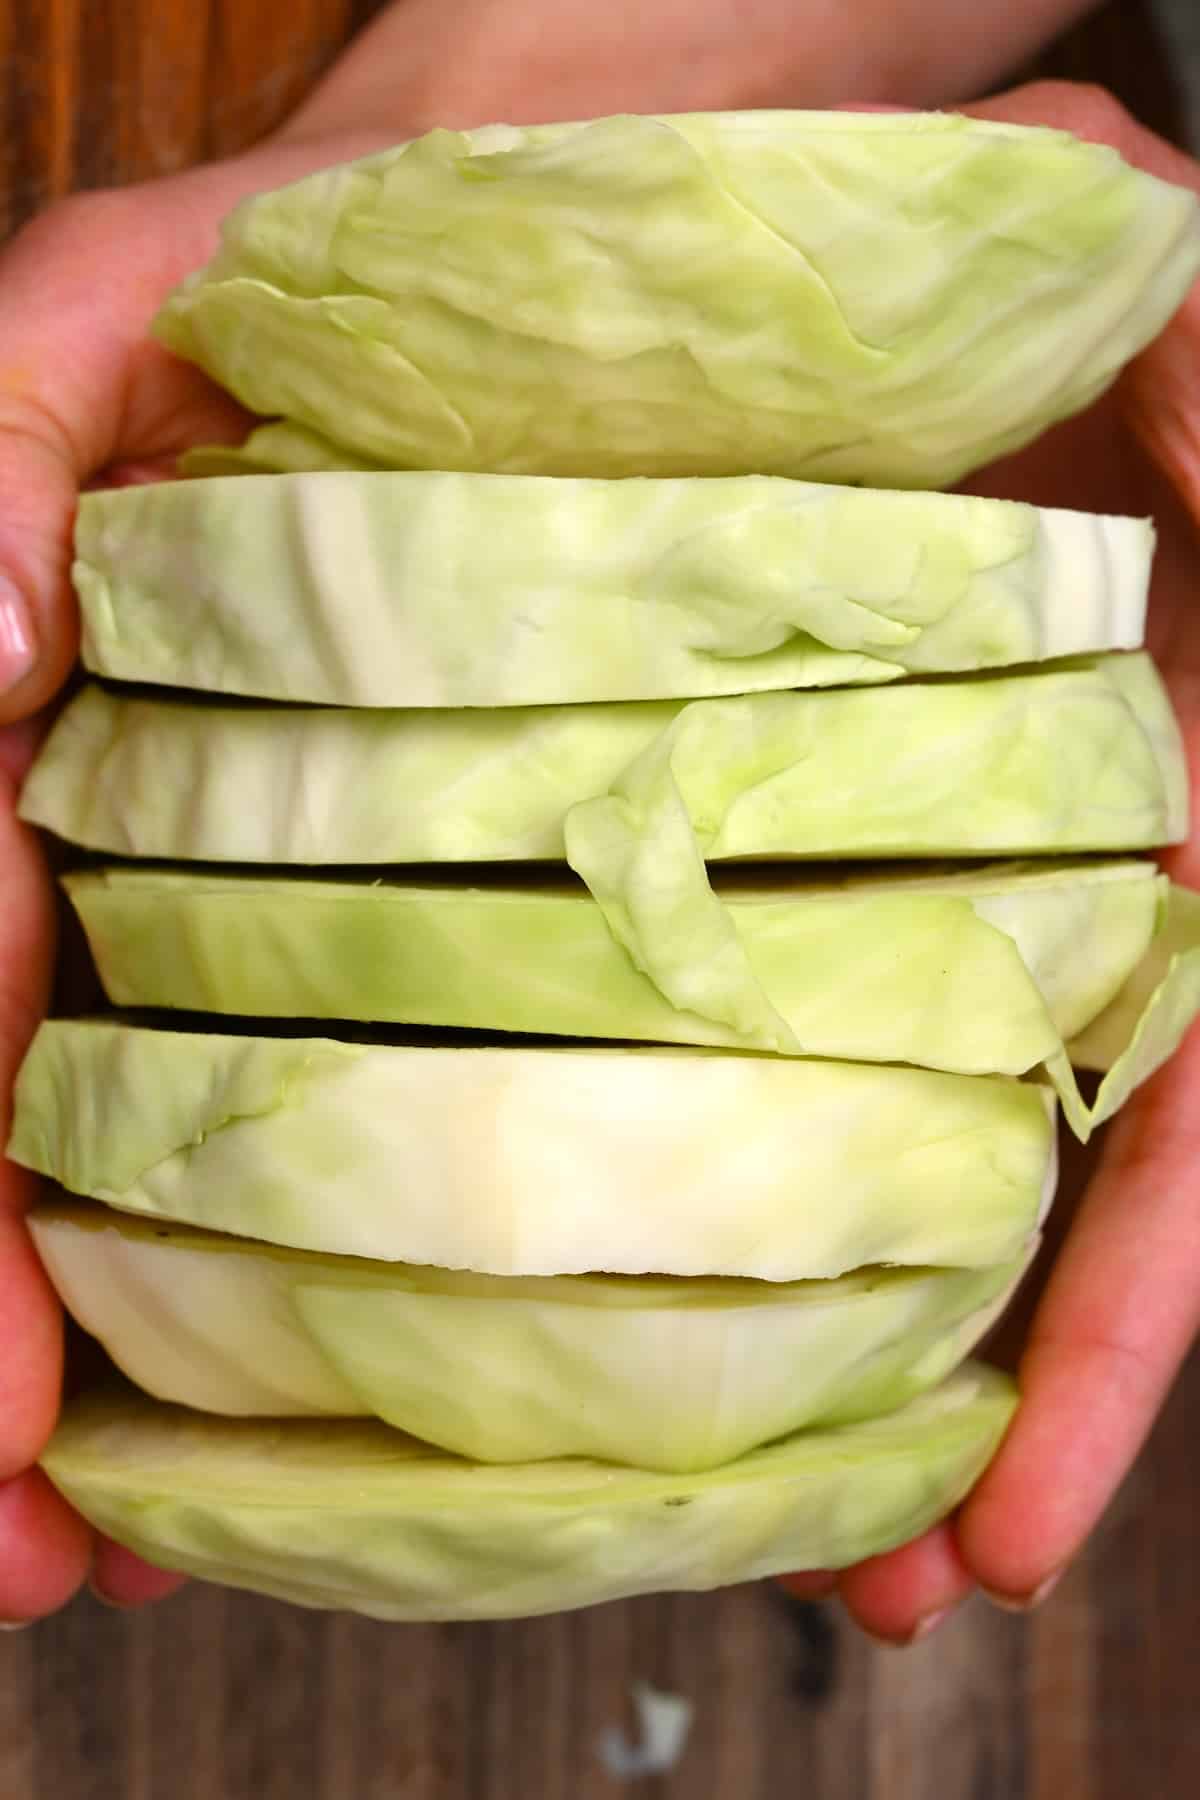 Cabbage cut into big slices